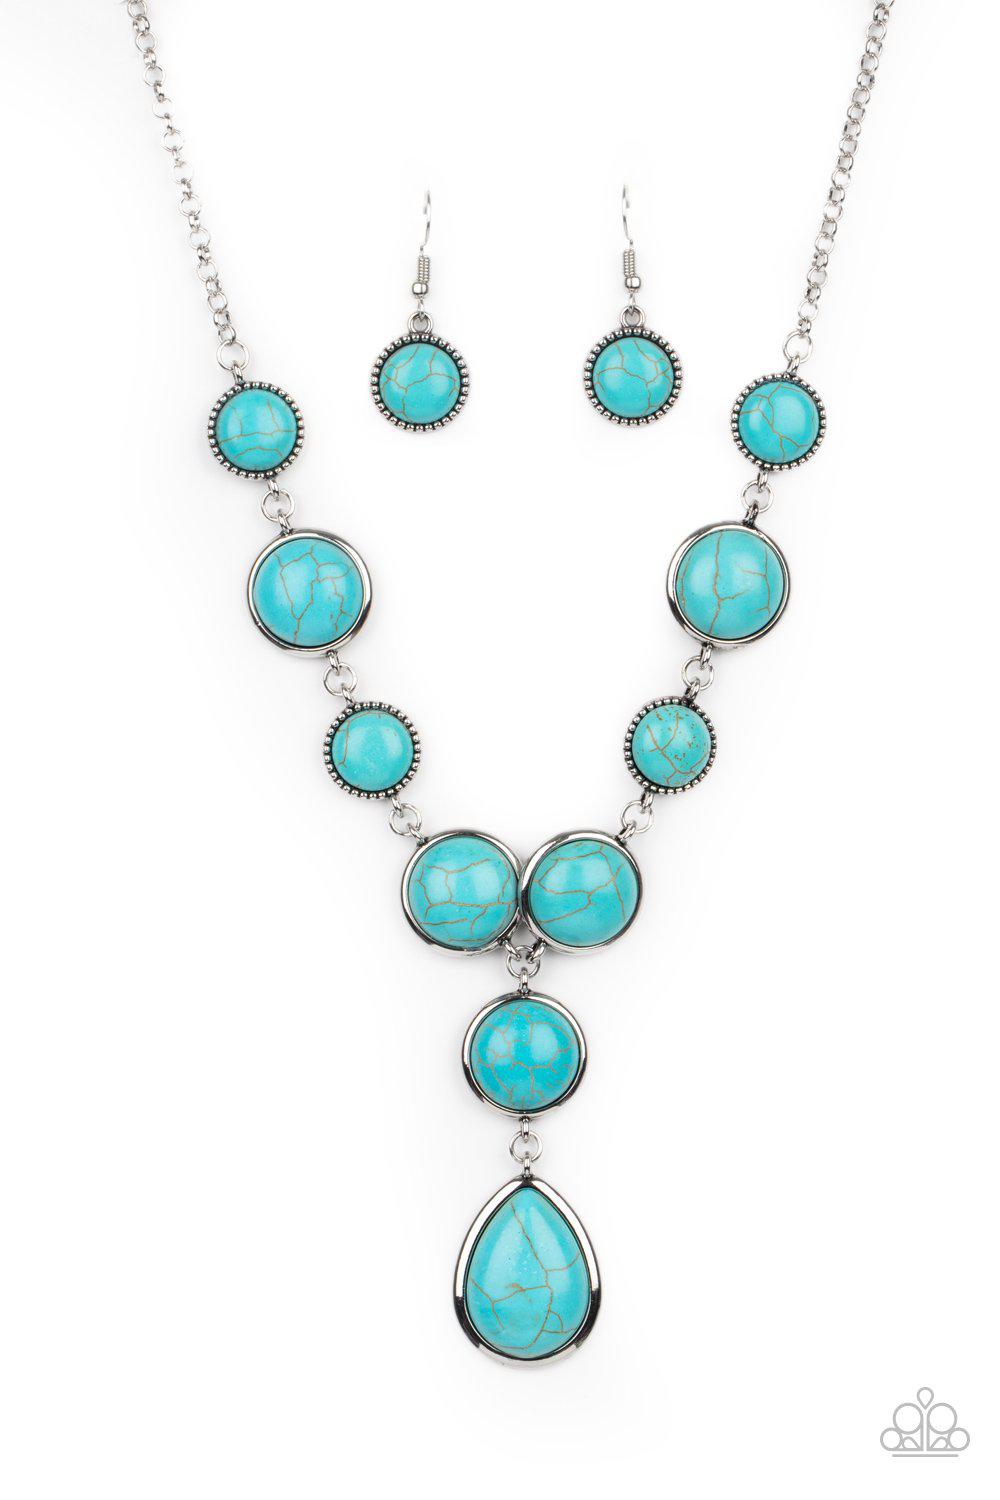 Terrestrial Trailblazer Turquoise Blue Stone Necklace - Paparazzi Accessories- lightbox - CarasShop.com - $5 Jewelry by Cara Jewels